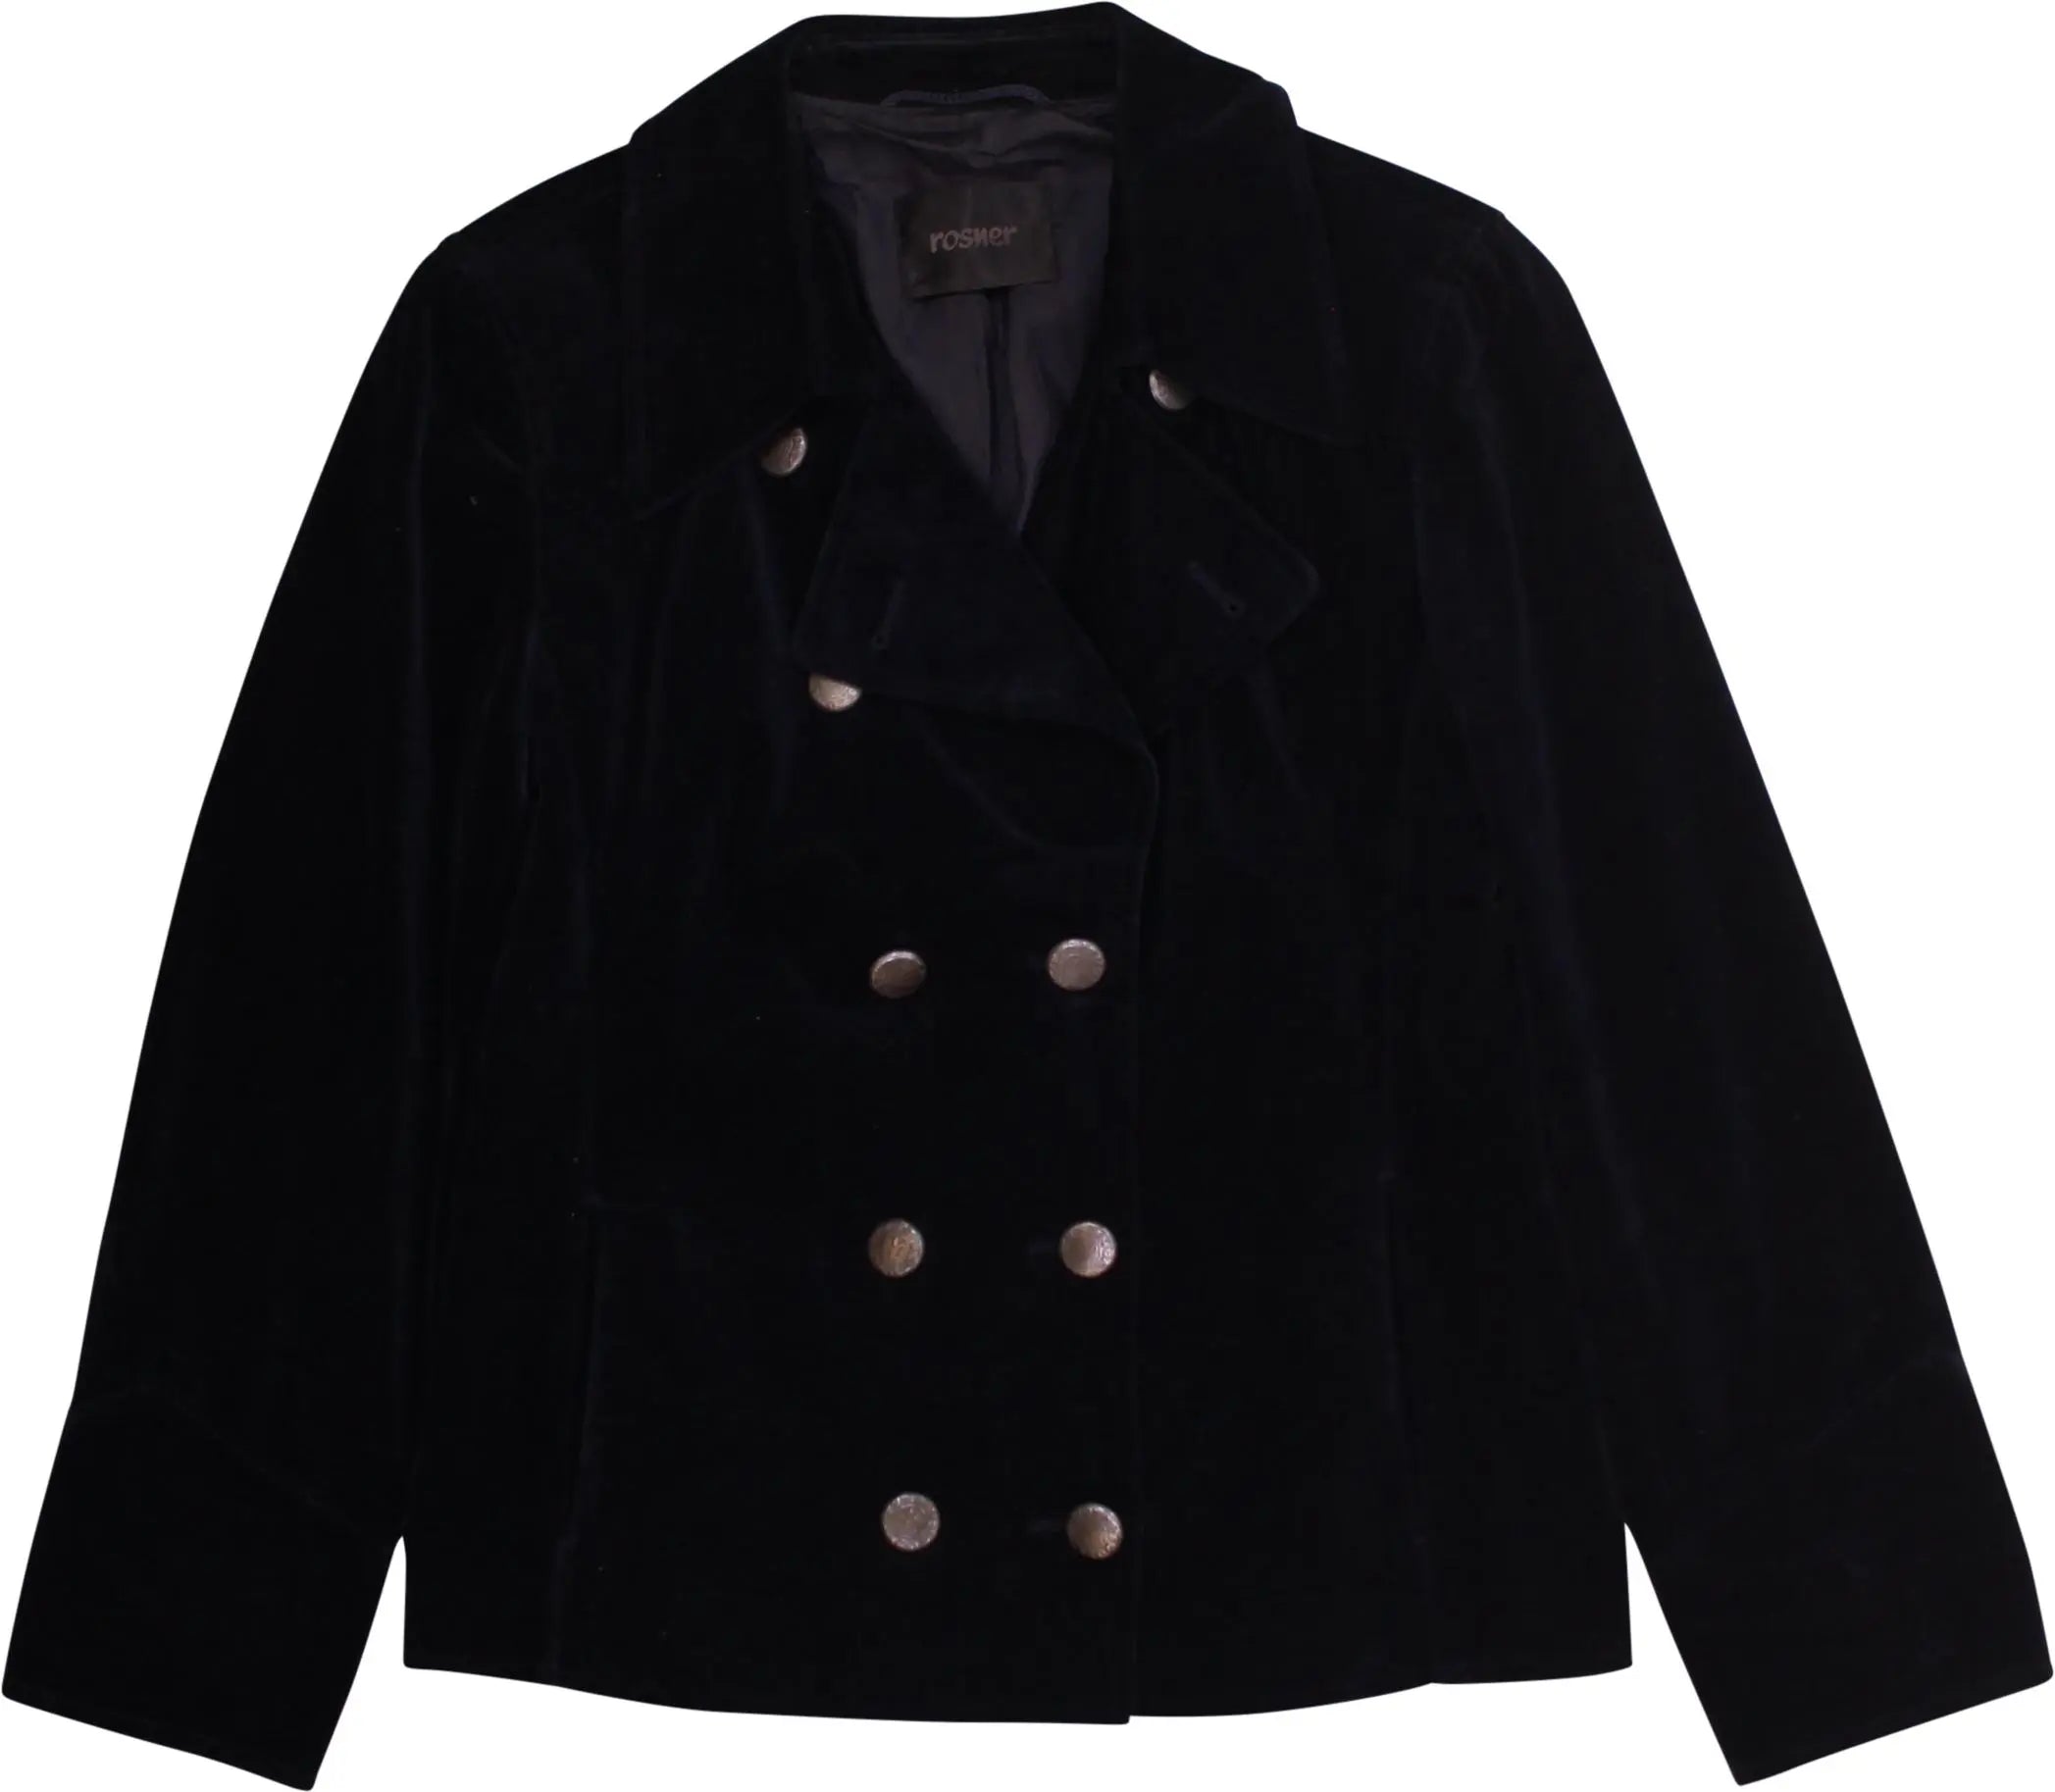 Rosner - Black Velvet Double Breasted Blazer- ThriftTale.com - Vintage and second handclothing